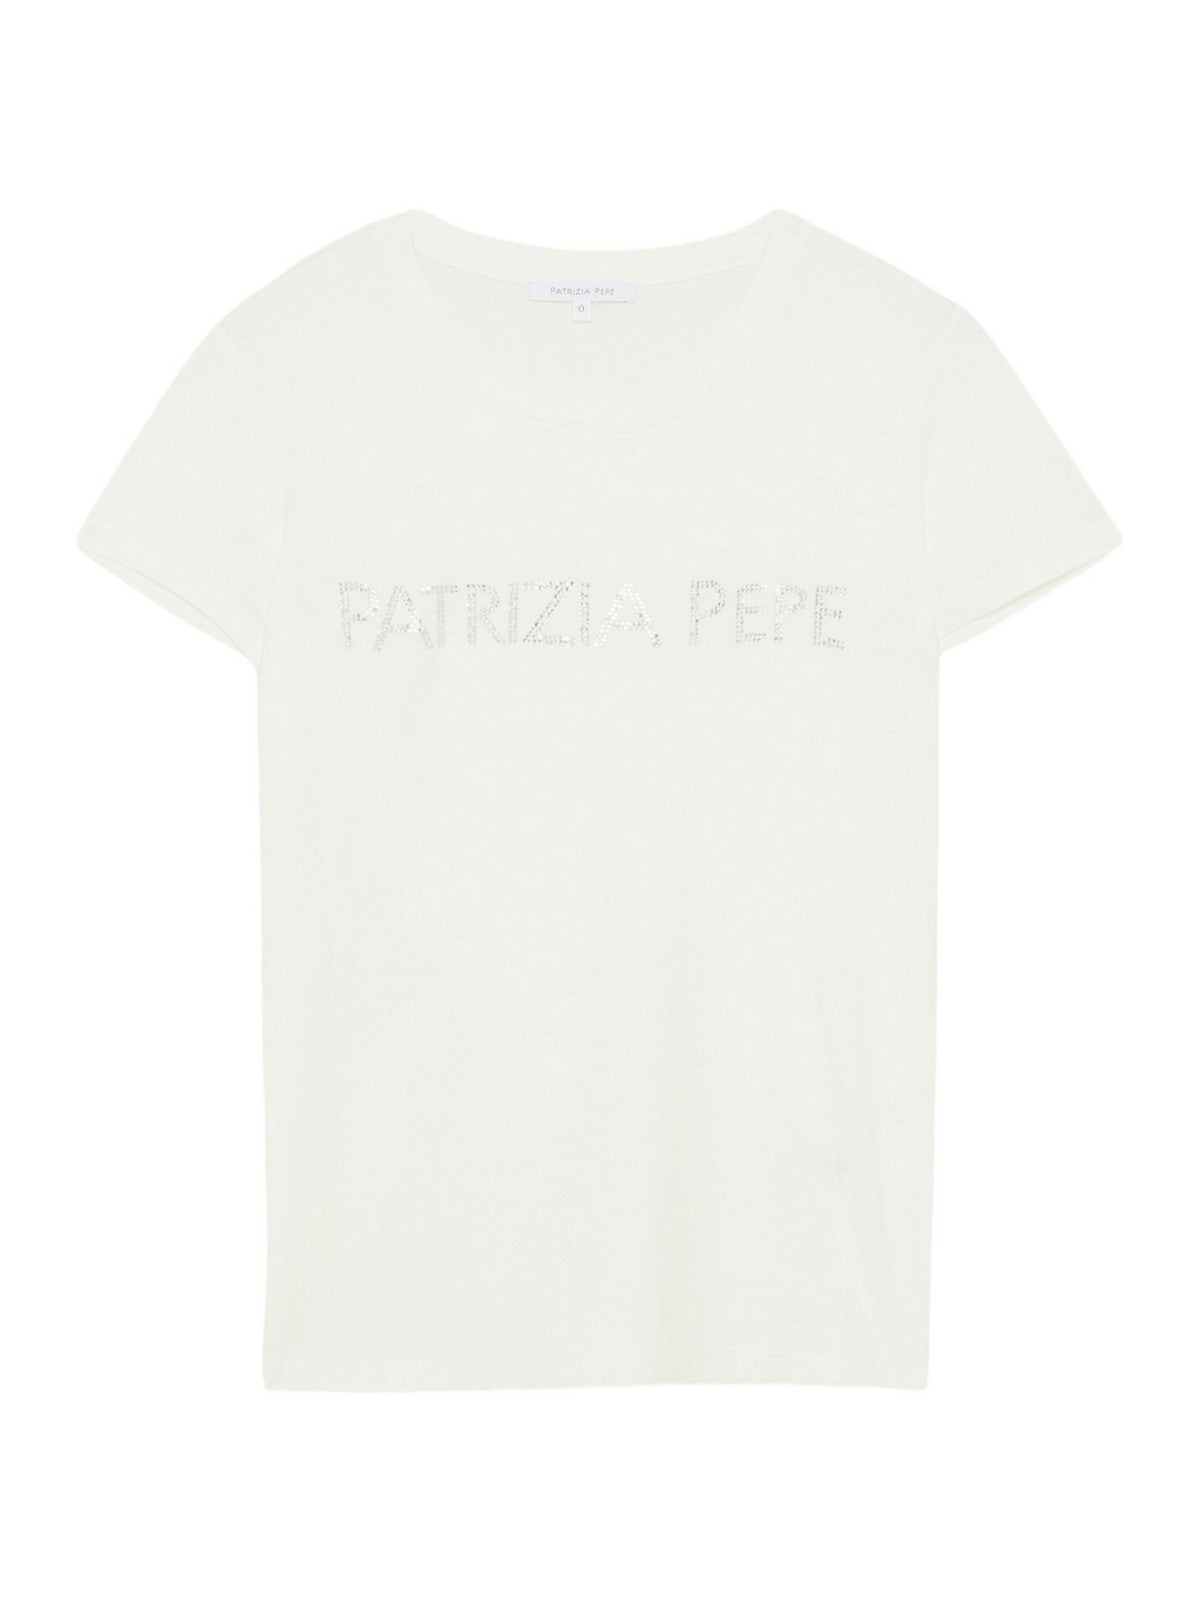 PATRIZIA PEPE T-Shirt e Polo Donna  CM1419 J013 W146 Bianco